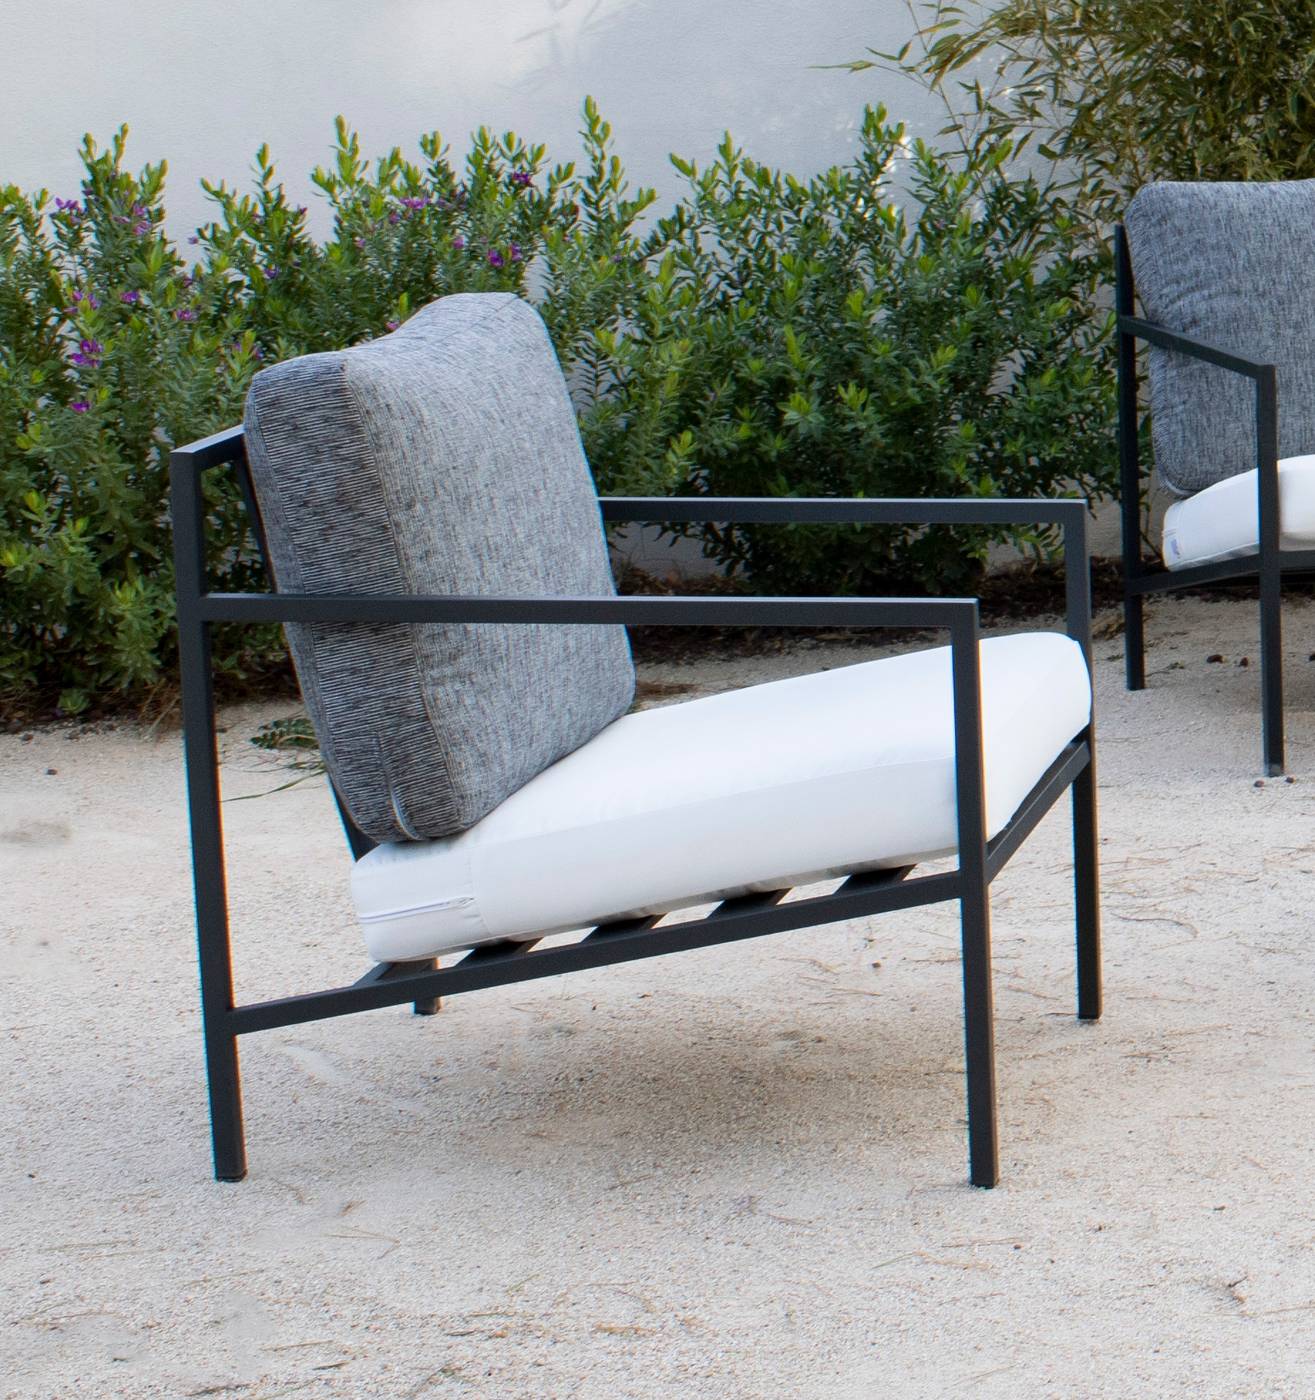 Set Aluminio Capri-8 - Conjunto aluminio: sofá 3 plazas + 2 sillones + 1 mesa de centro. Estructura color blanco o antracita.